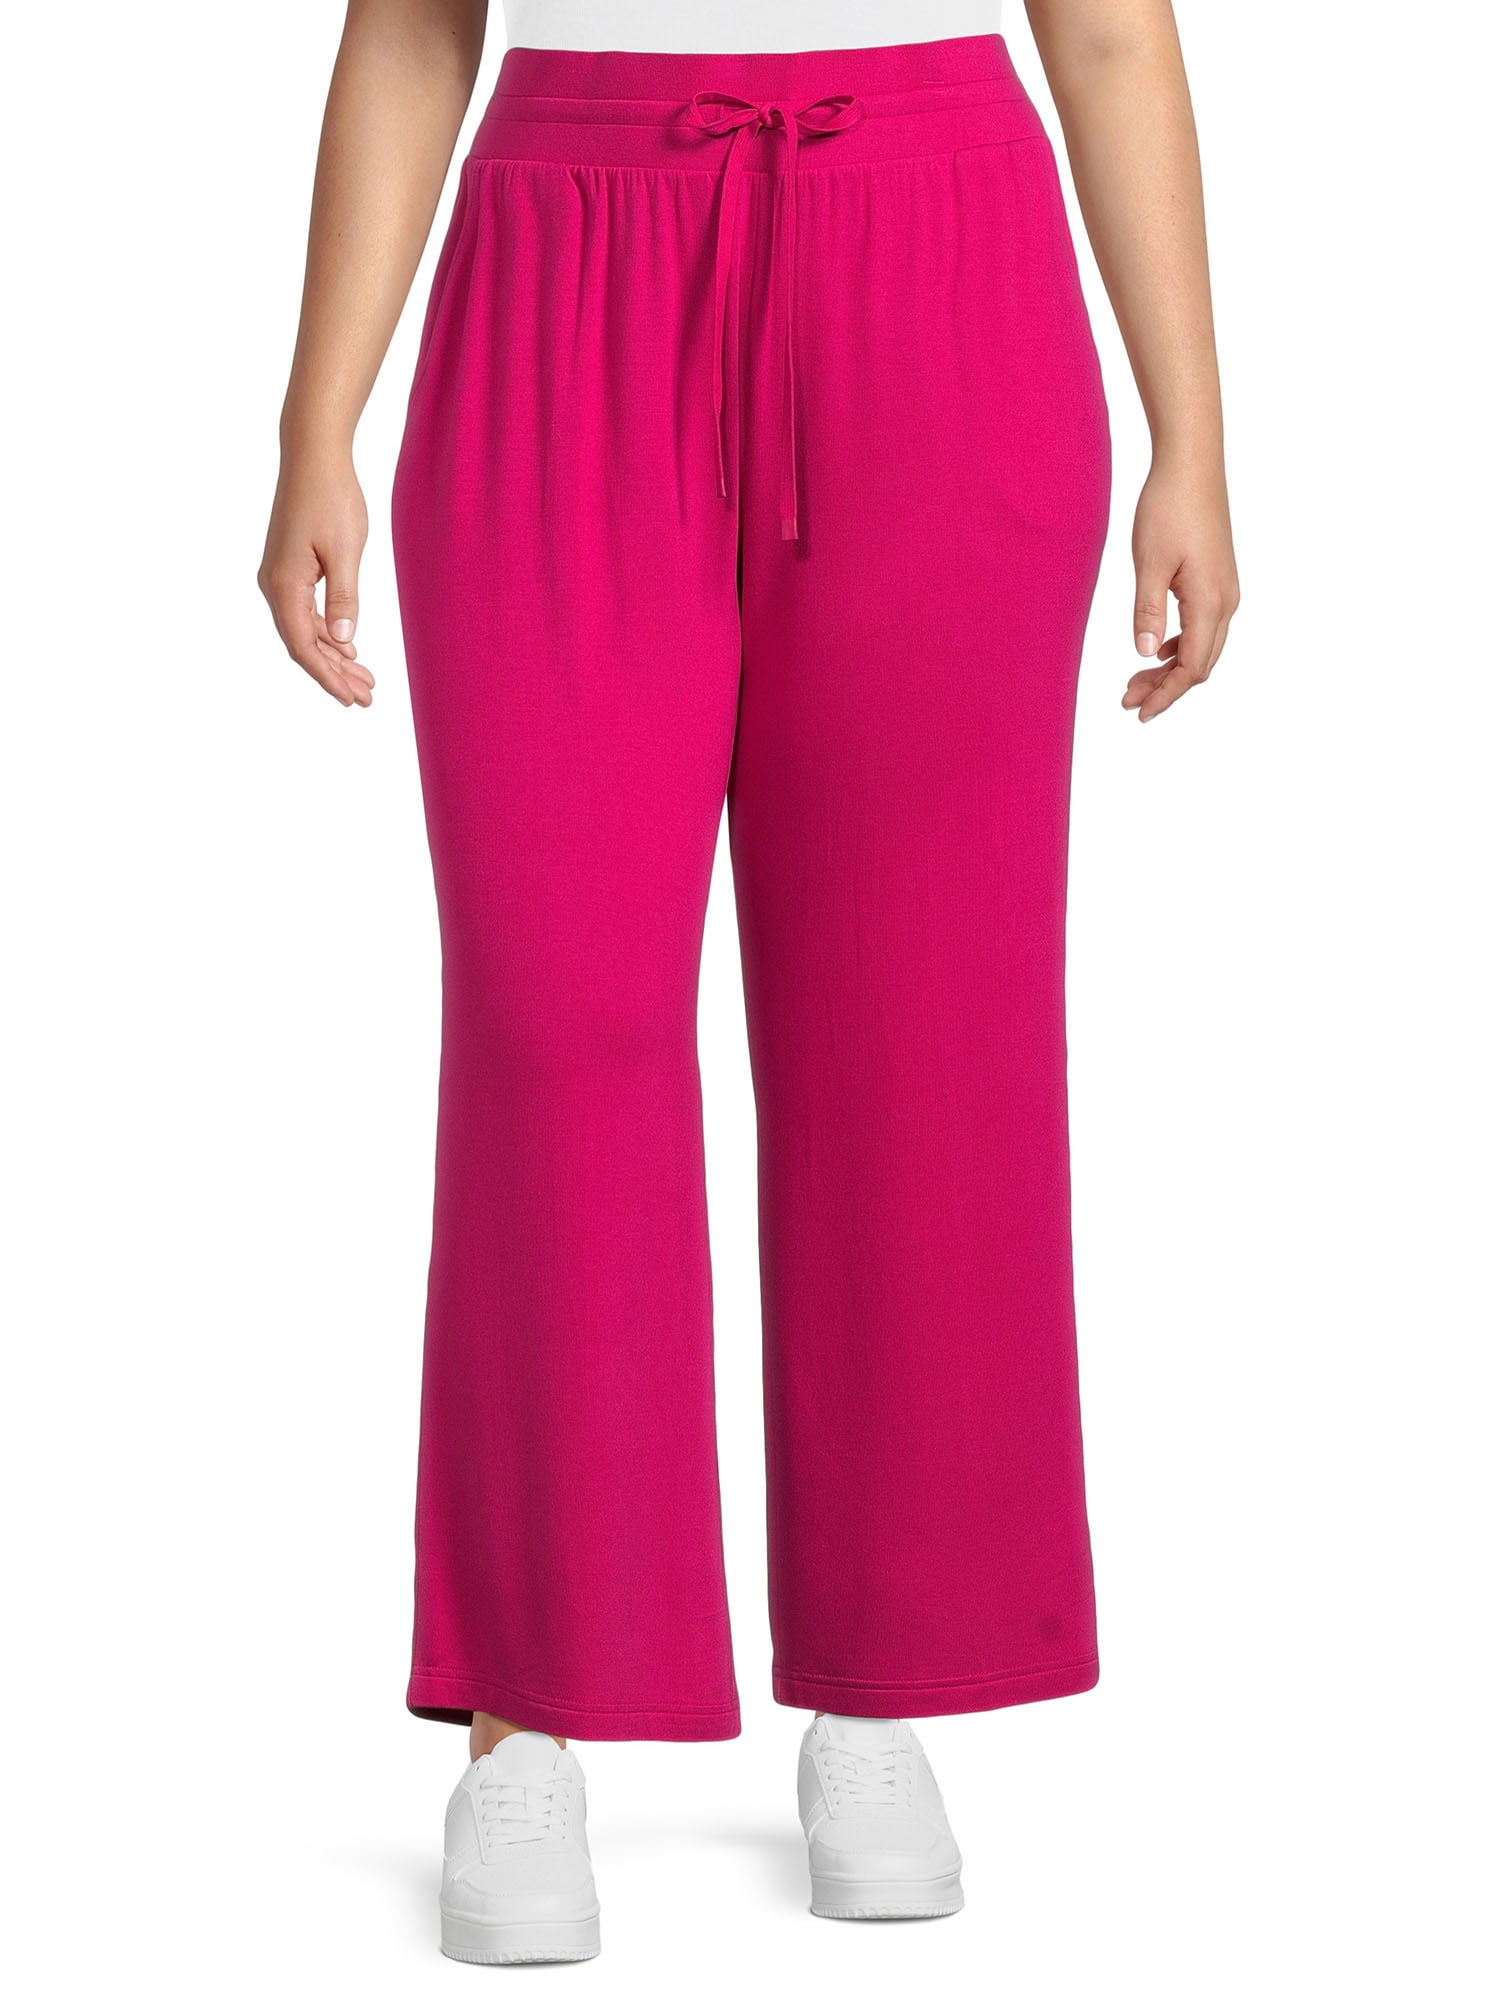 Terra & Sky Women's Plus Size Knit Pants - Walmart.com